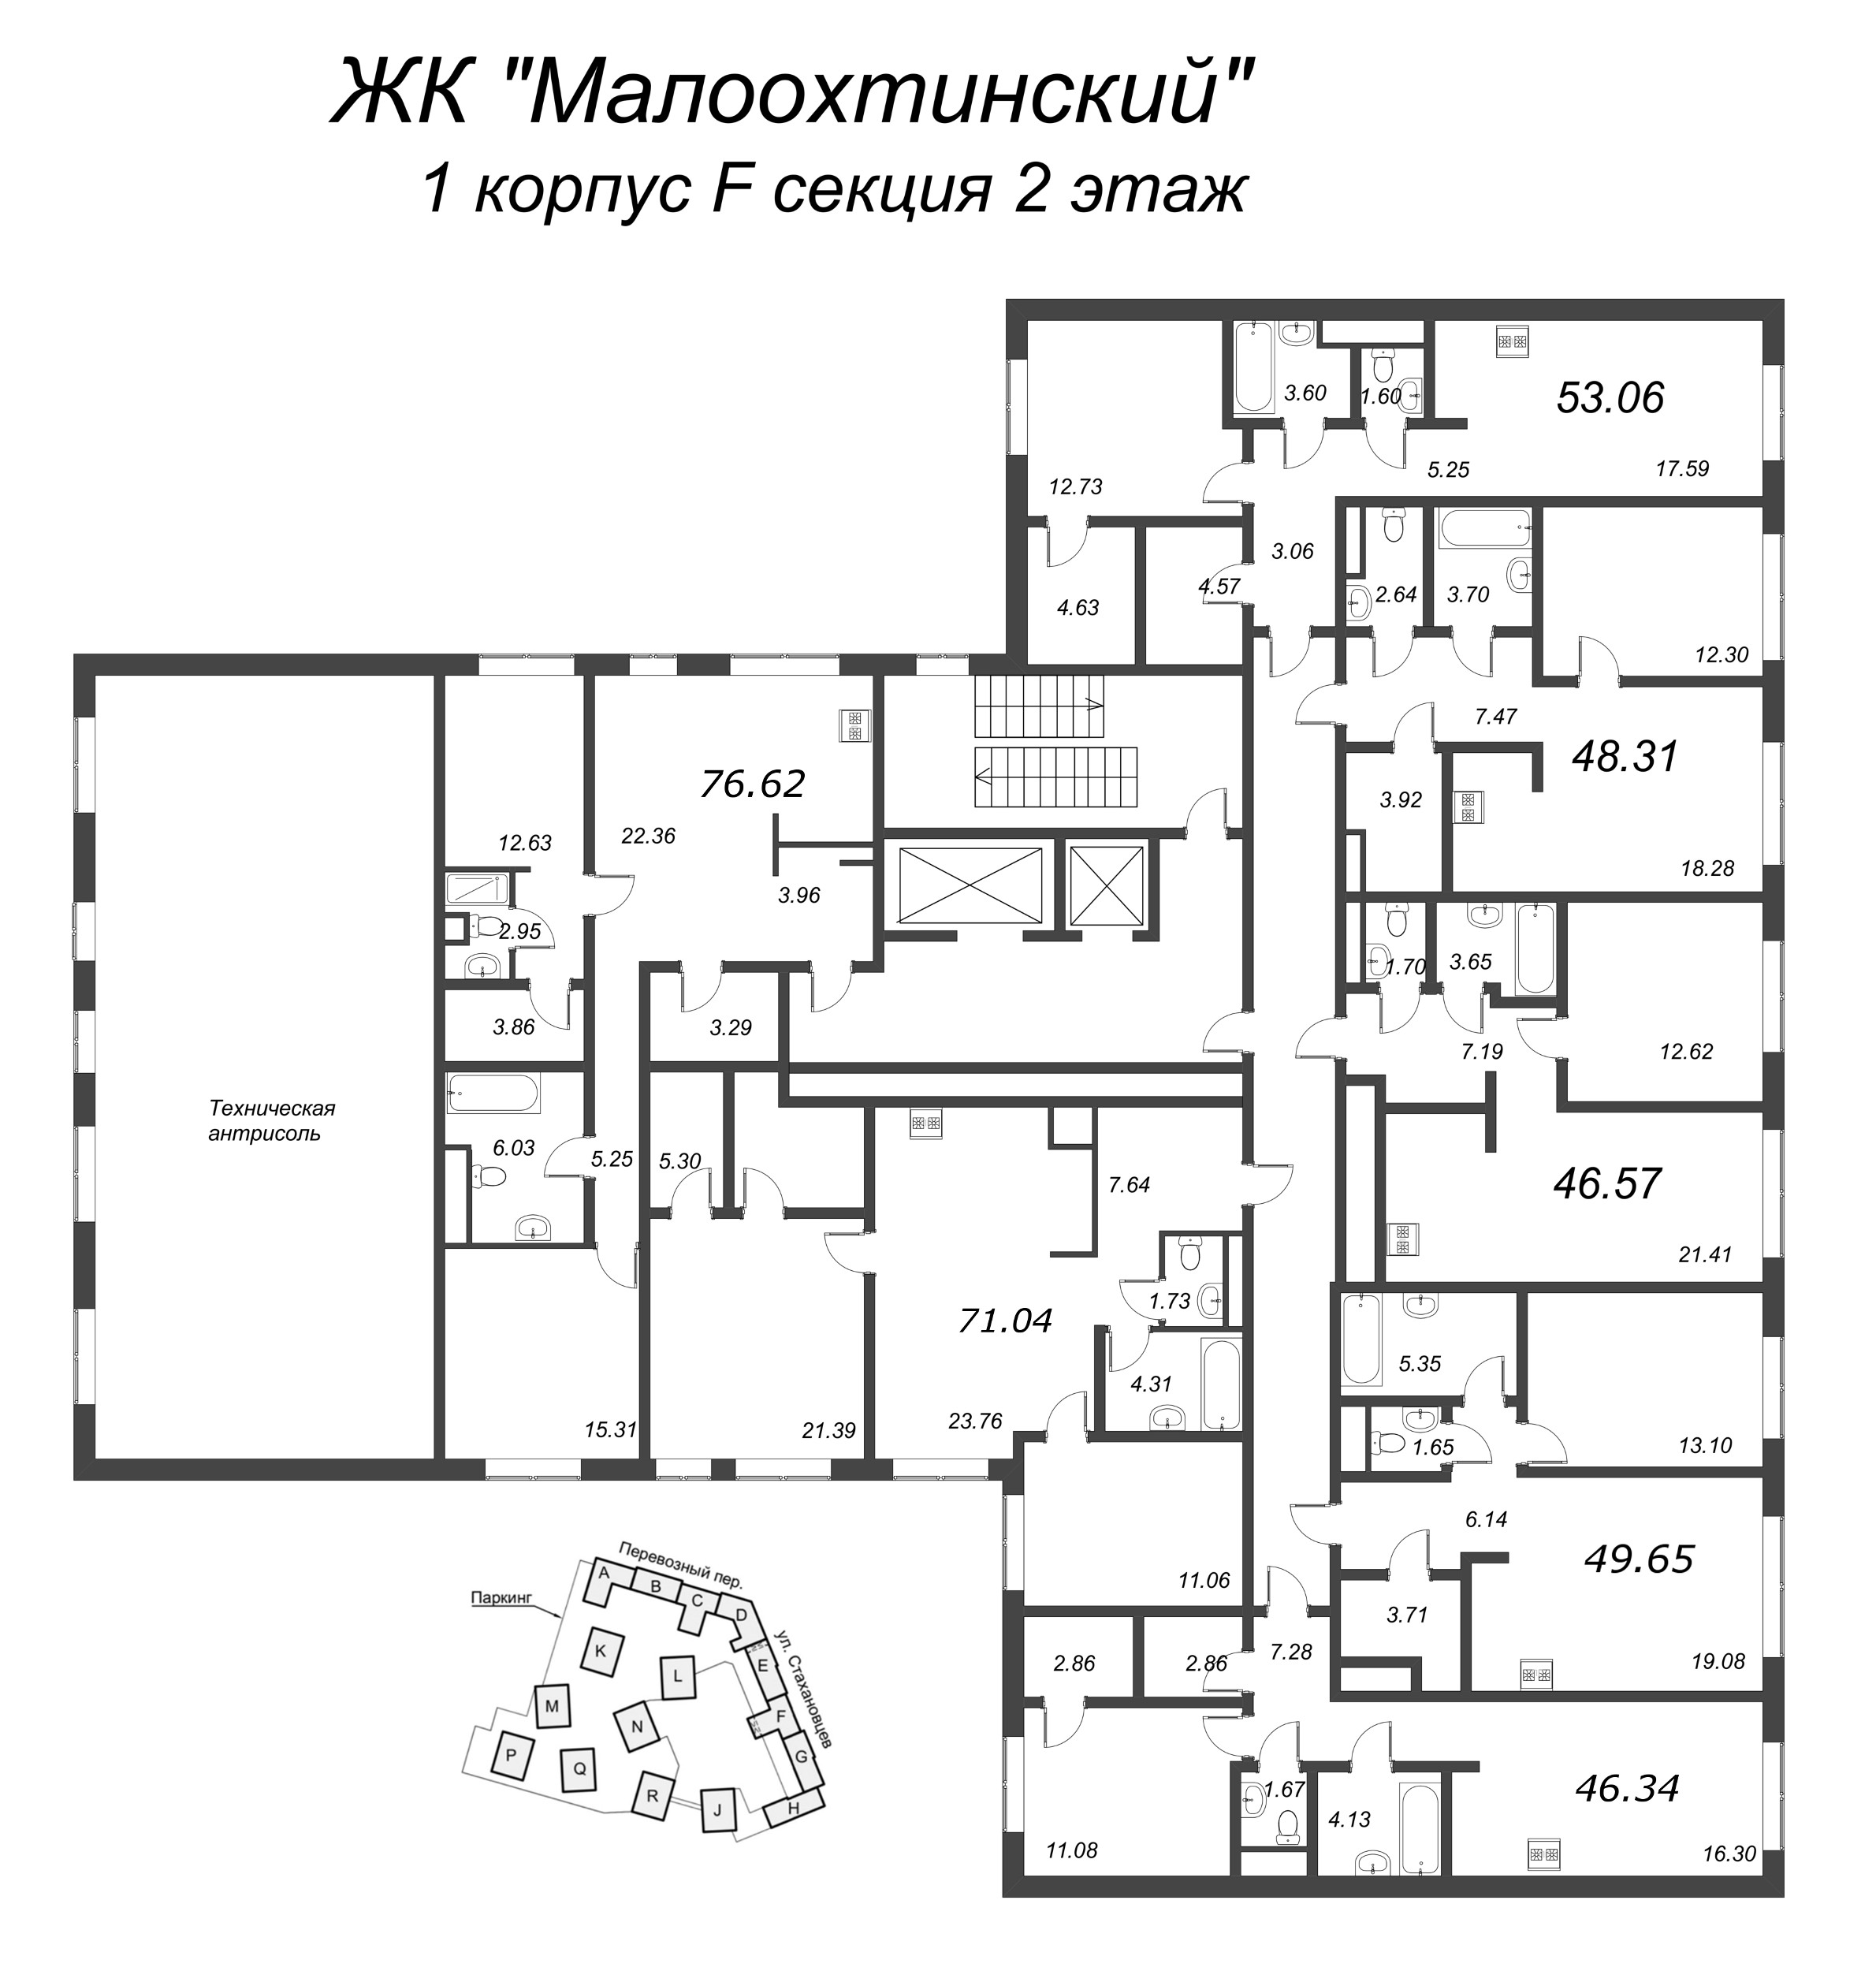 2-комнатная (Евро) квартира, 50.1 м² - планировка этажа